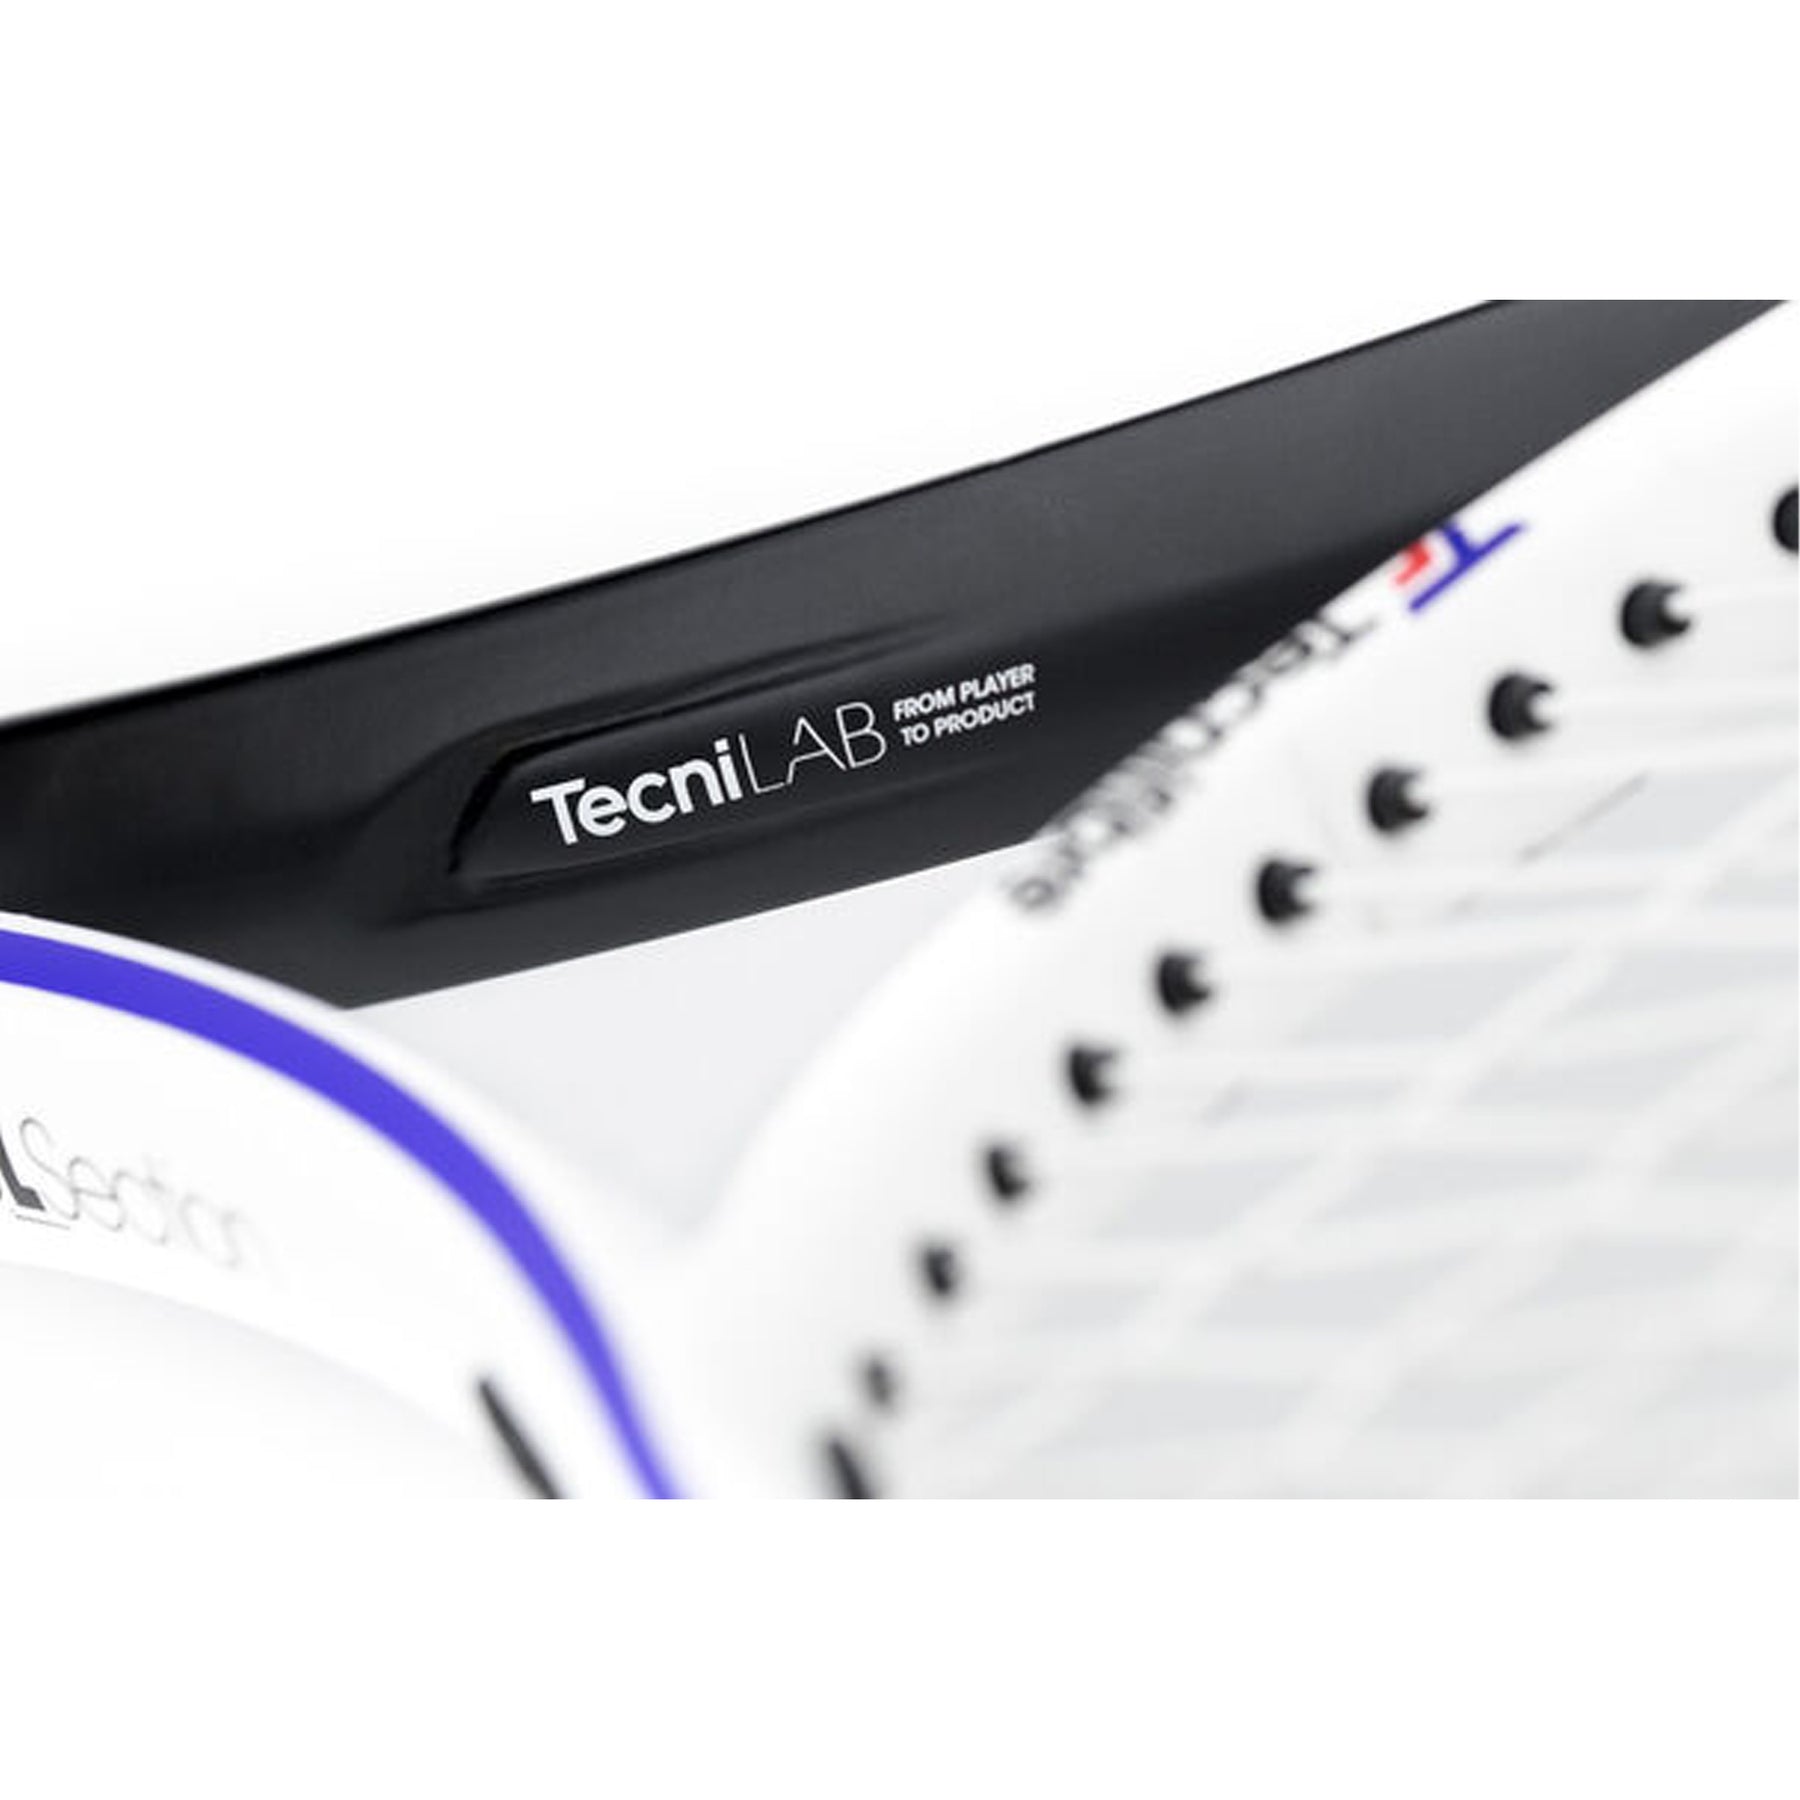 Tecnifibre T-Fight RS 305 Tennis Racket